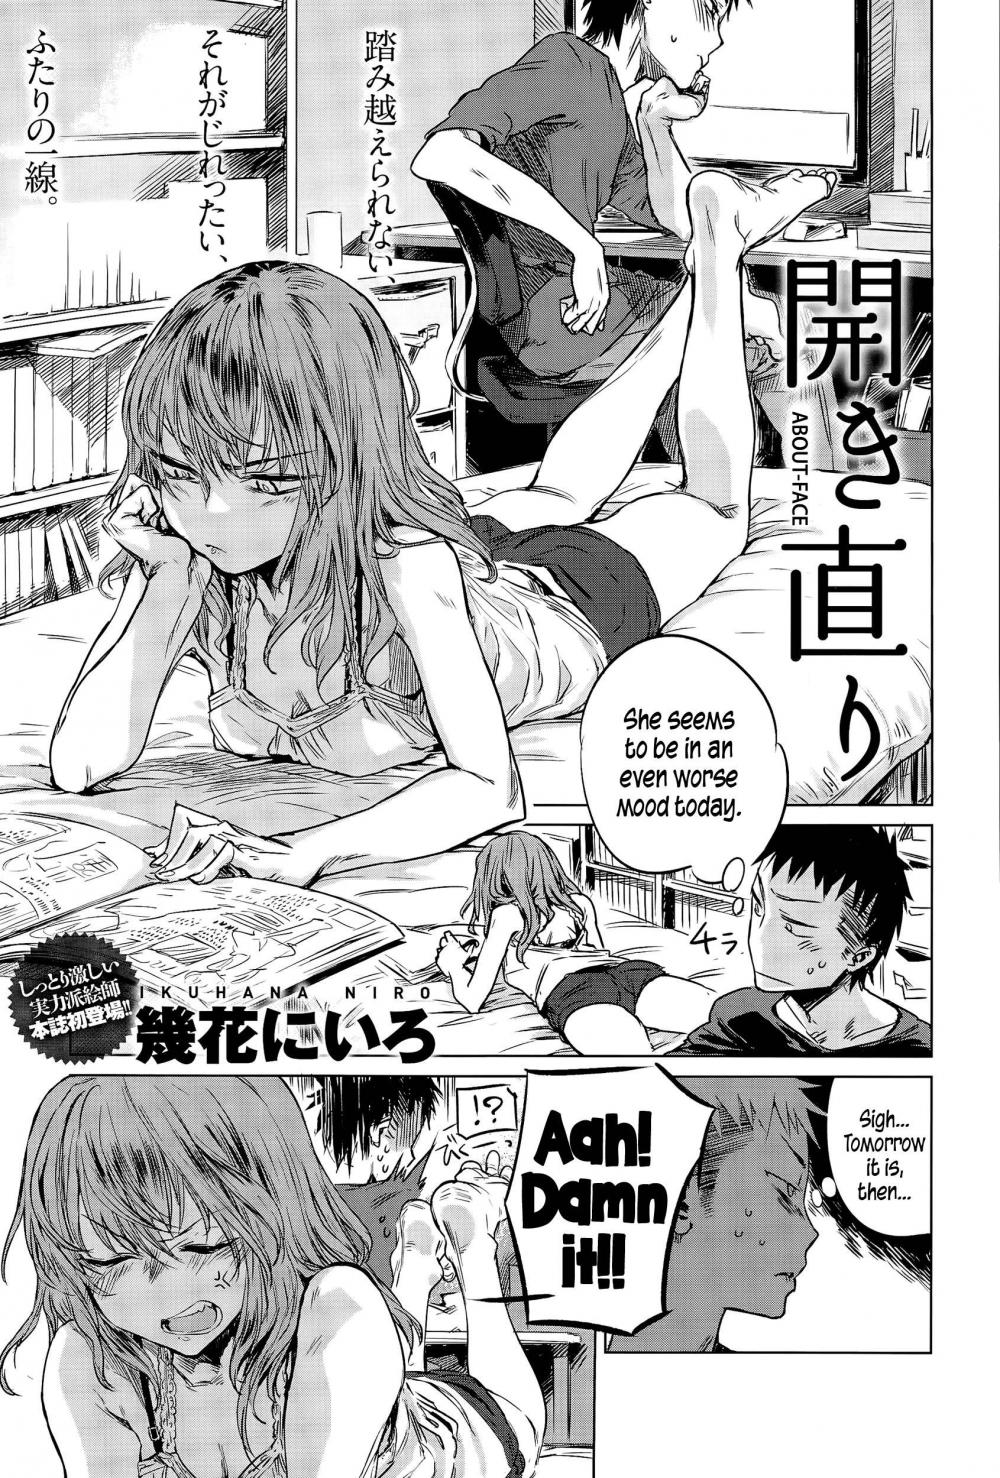 Hentai Manga Comic-About-Face-Read-1